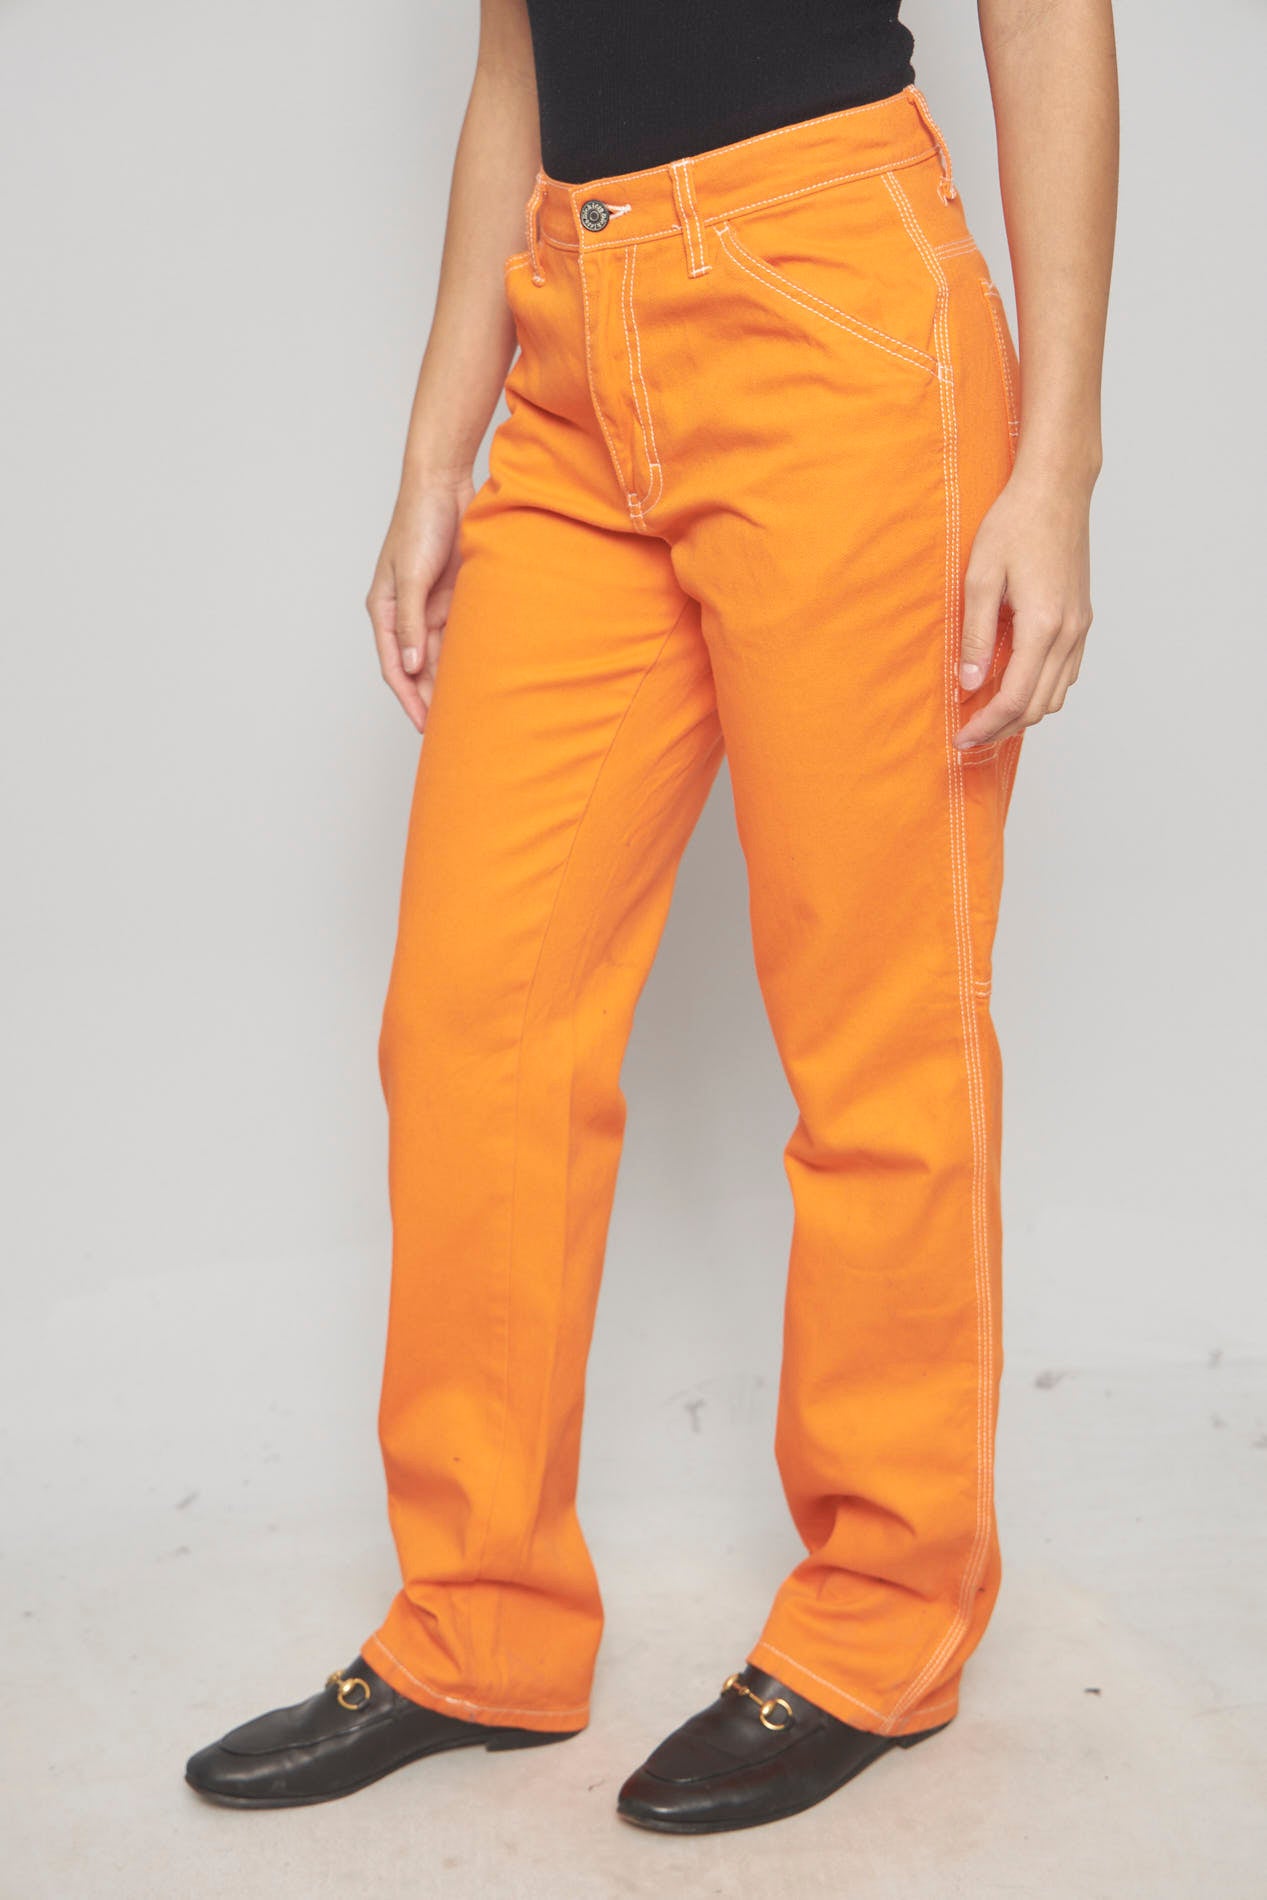 Pantalon casual  naranjo dickies talla S 172